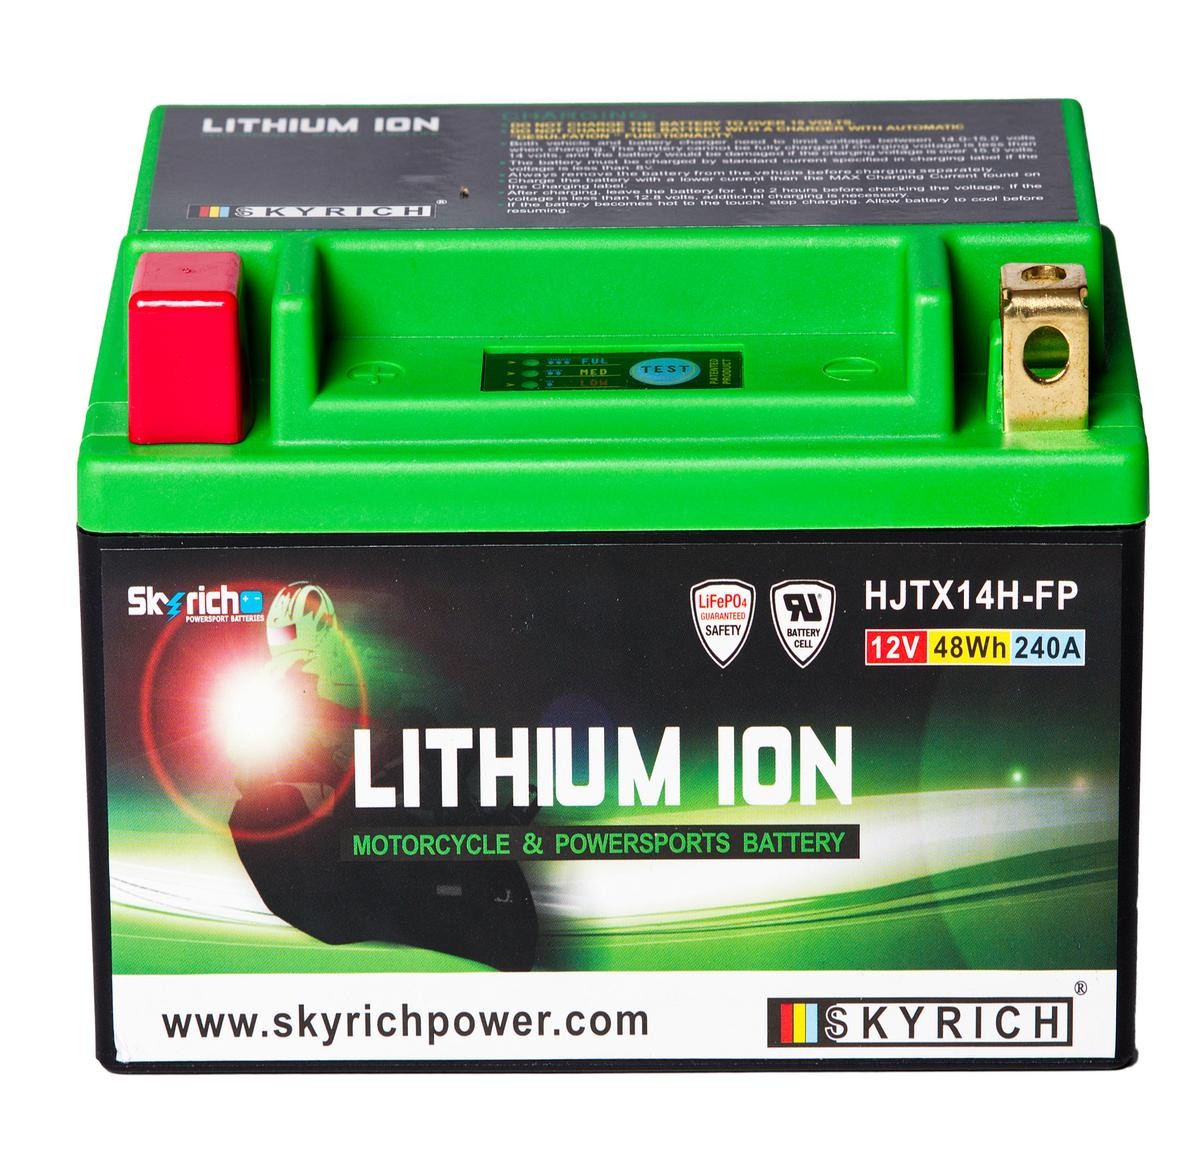 SKYRICH LITHIUM ION Batterie 12V 4Ah 240A N Li-Ionen-Batterie HJTX14H-FP MZ Mofa Maxi-Scooter